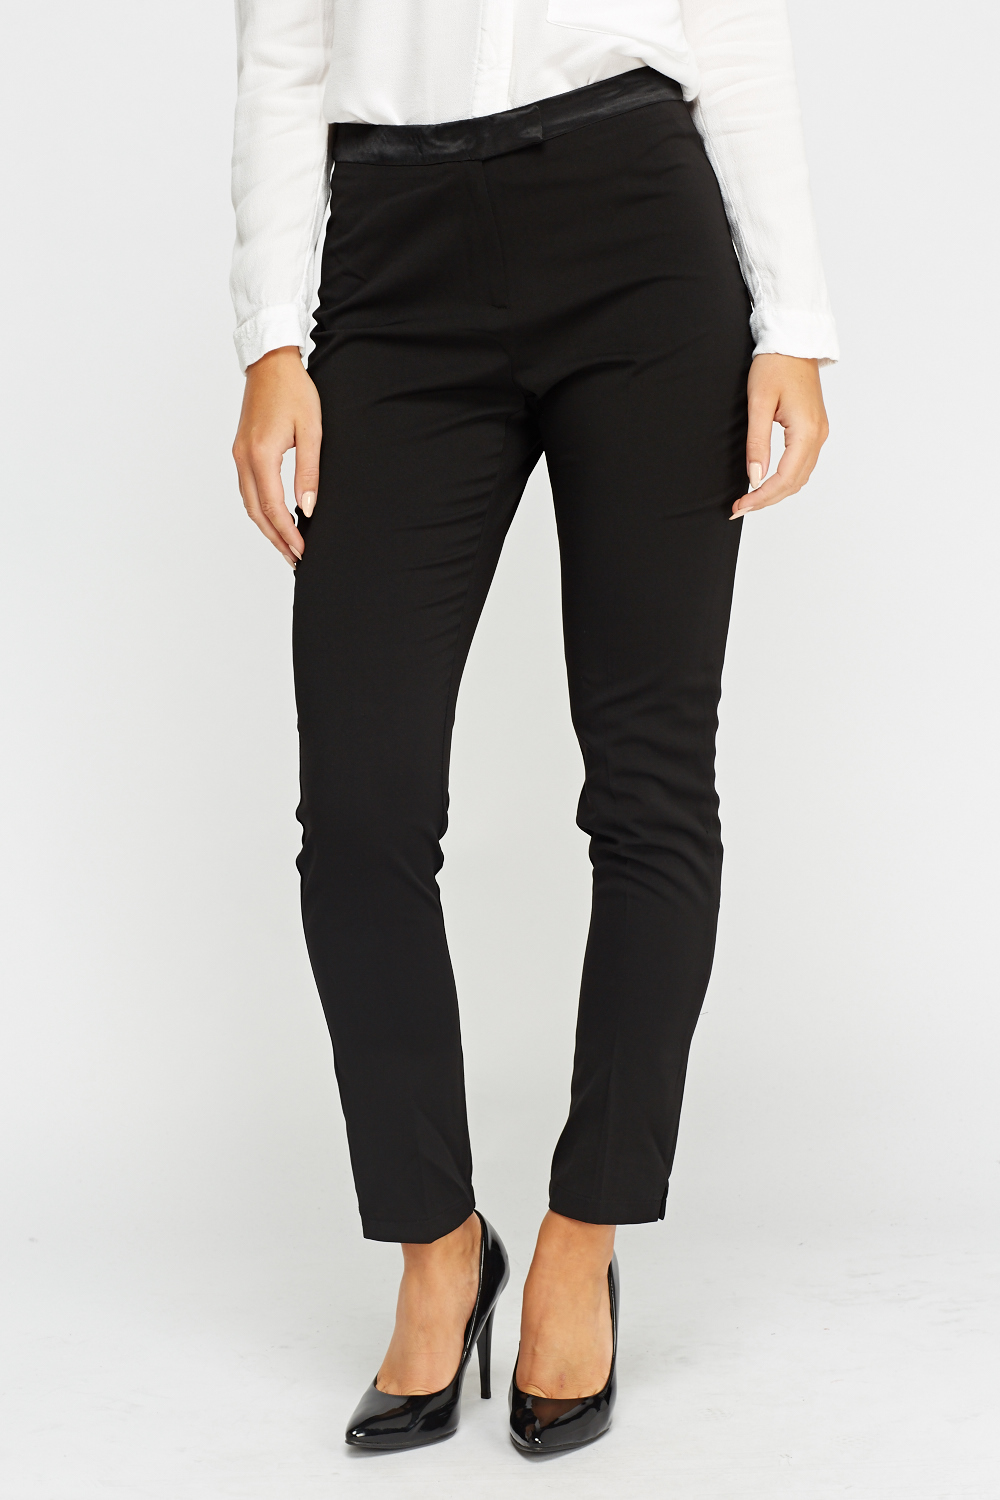 Contrast Trim Black Trousers - Just $7